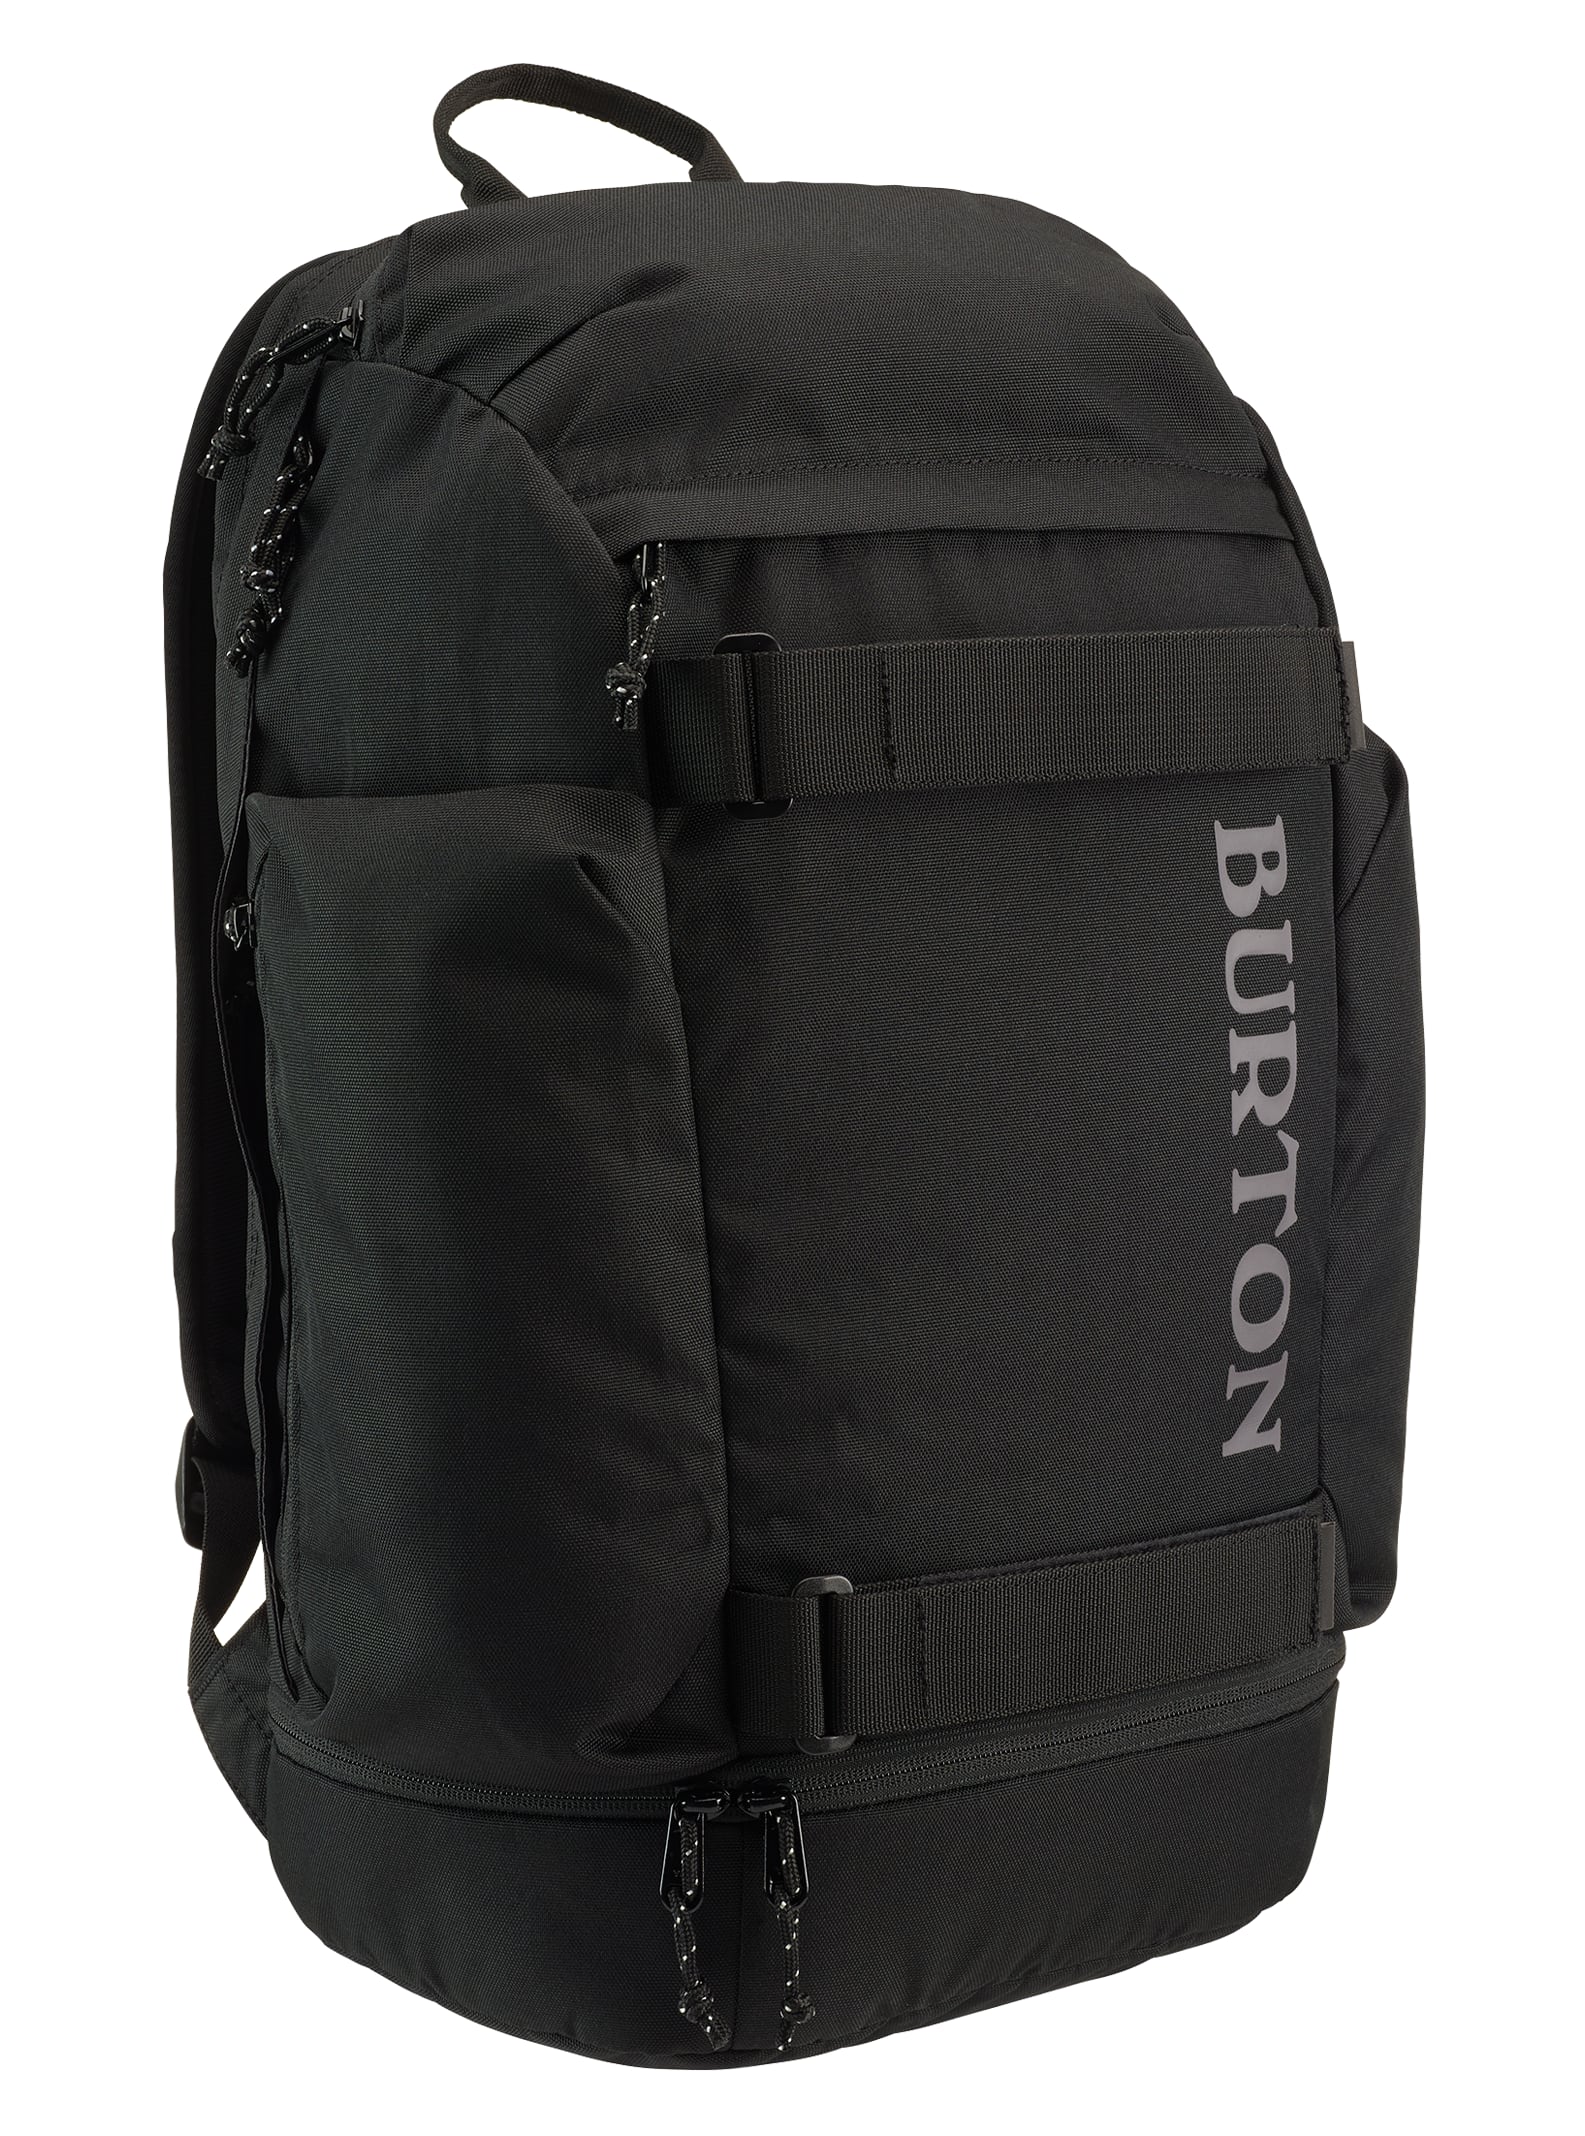 Burton Backpack Clearance, 58% OFF | www.ingeniovirtual.com